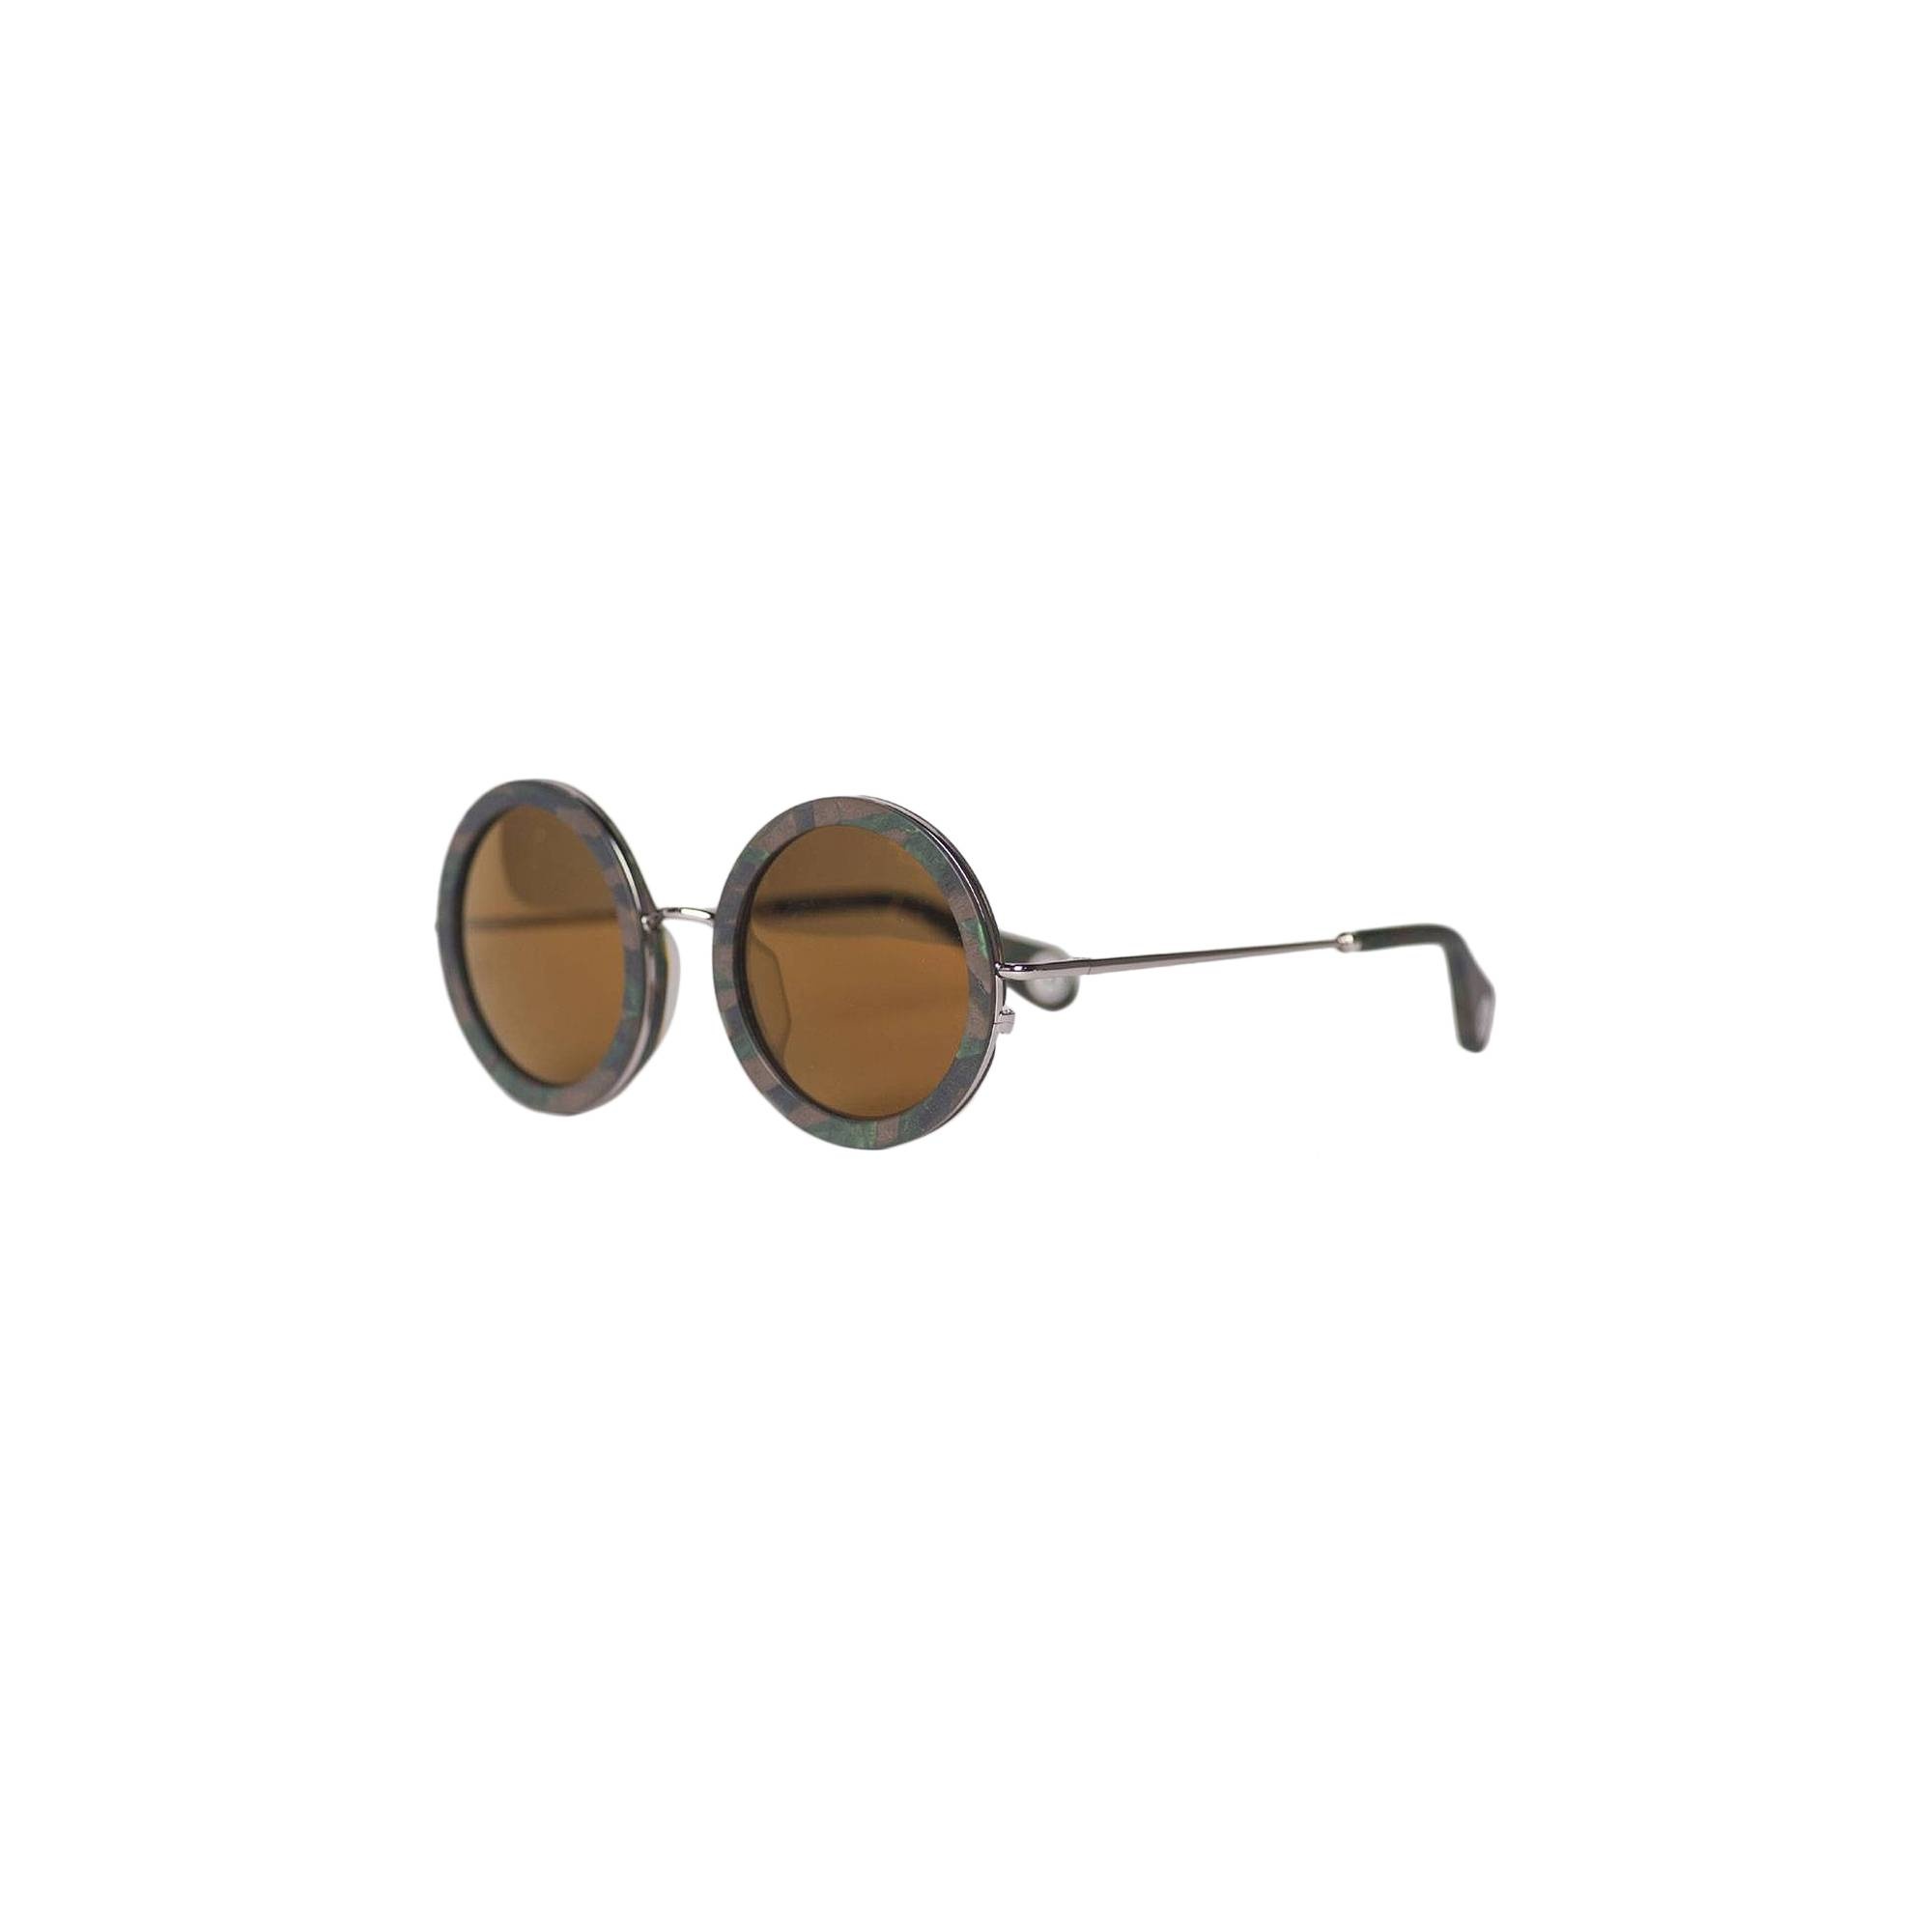 BAPE Sunglasses 'Camo' - 1